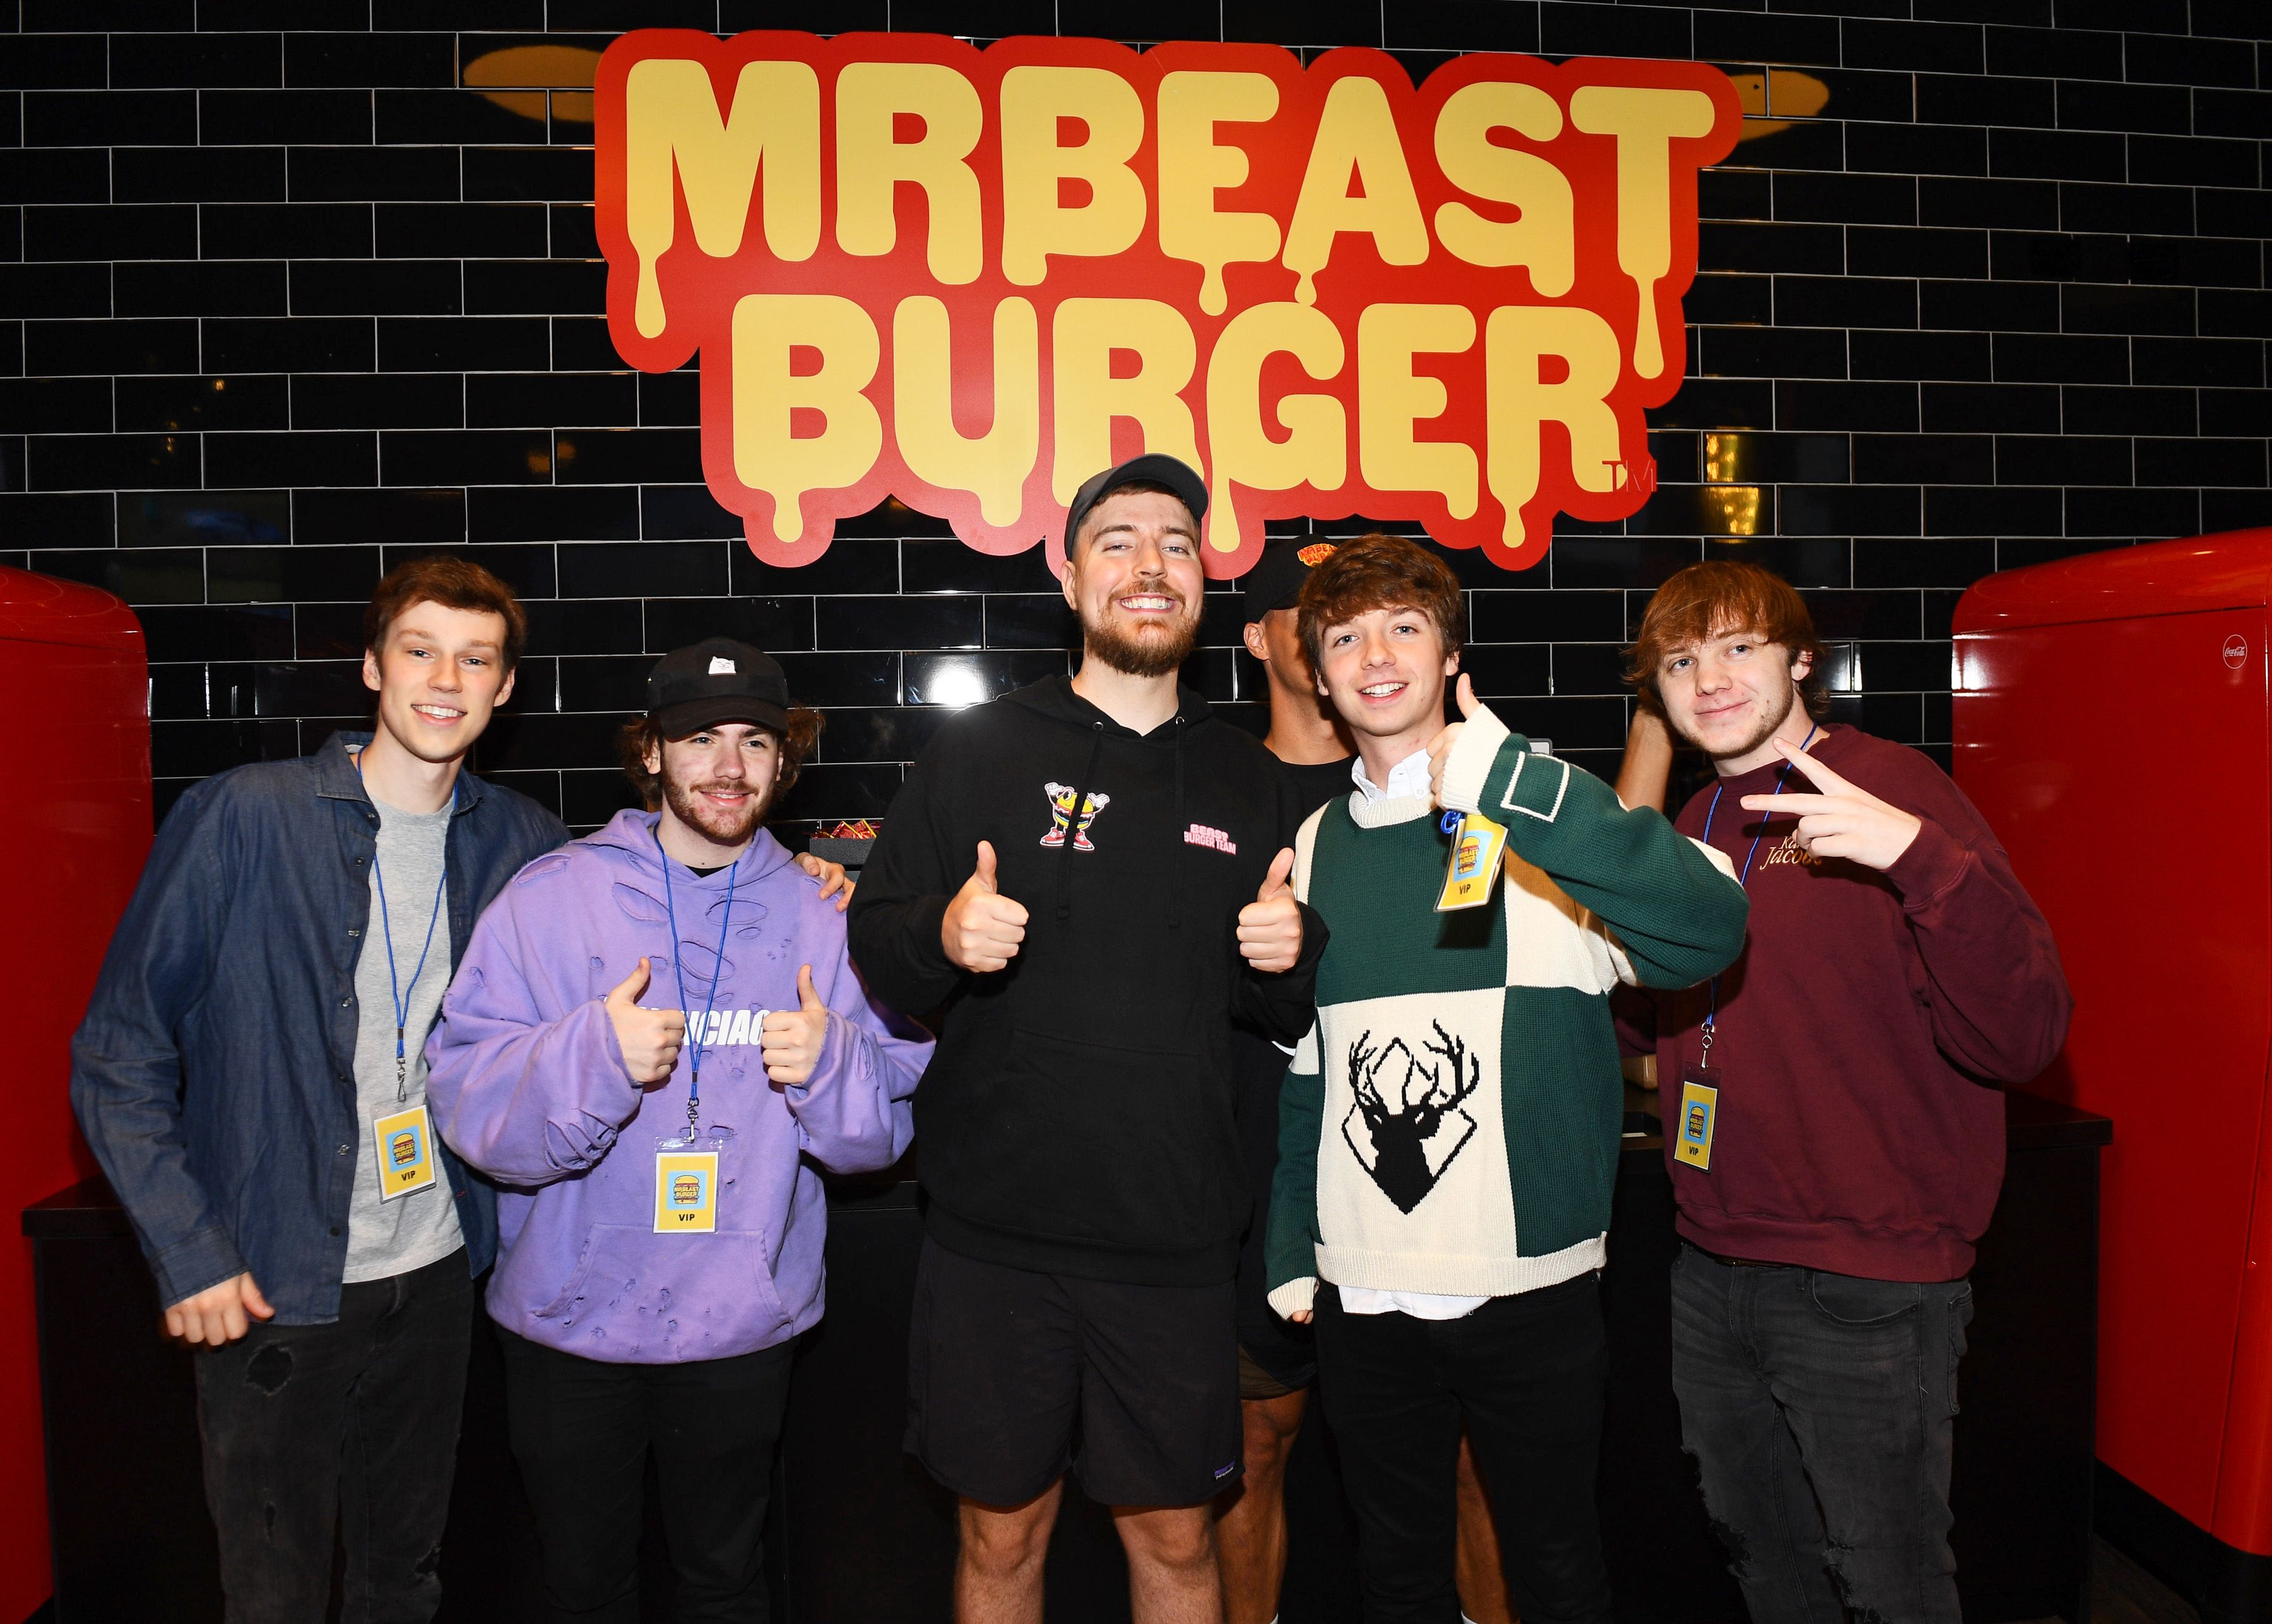 Mr. Beast Burger Delivery in Miami, FL, Full Menu & Deals